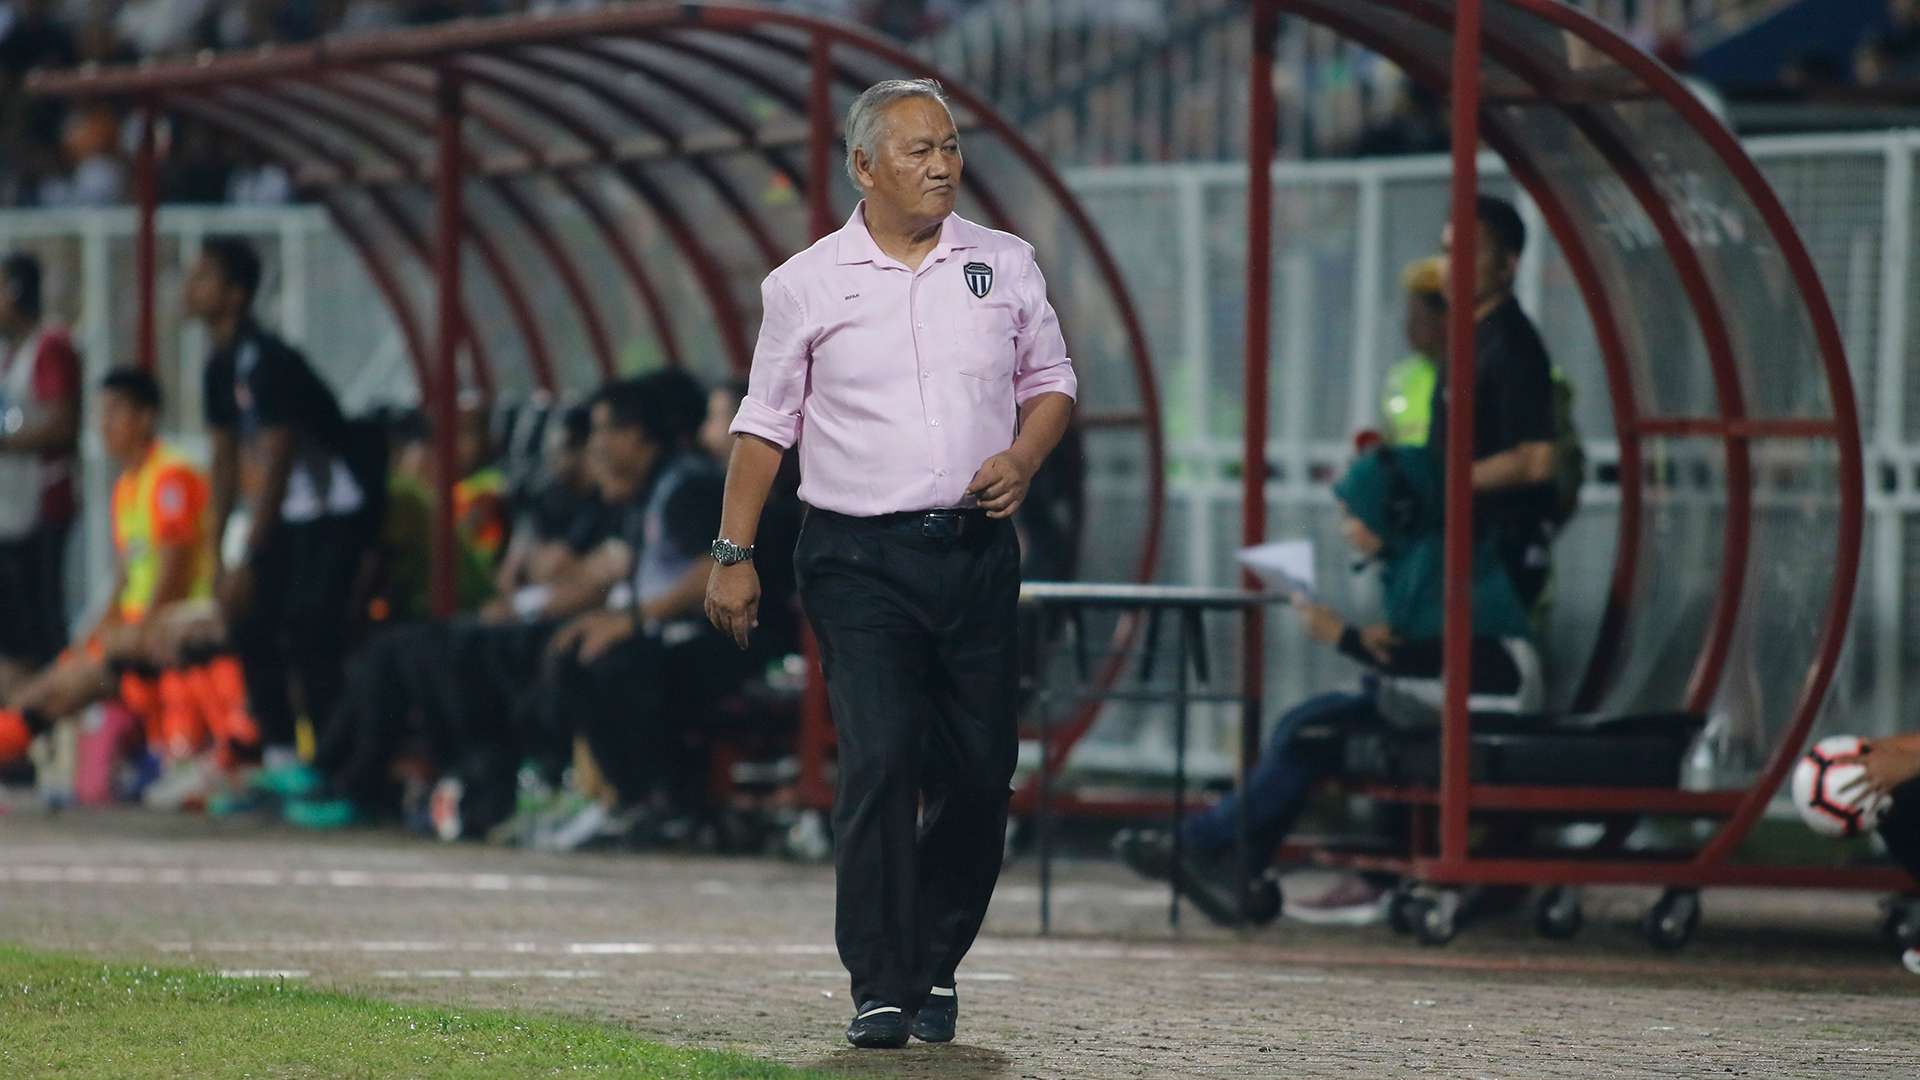 Irfan Bakti, Terengganu v PKNS, Super League, 1 Feb 2019